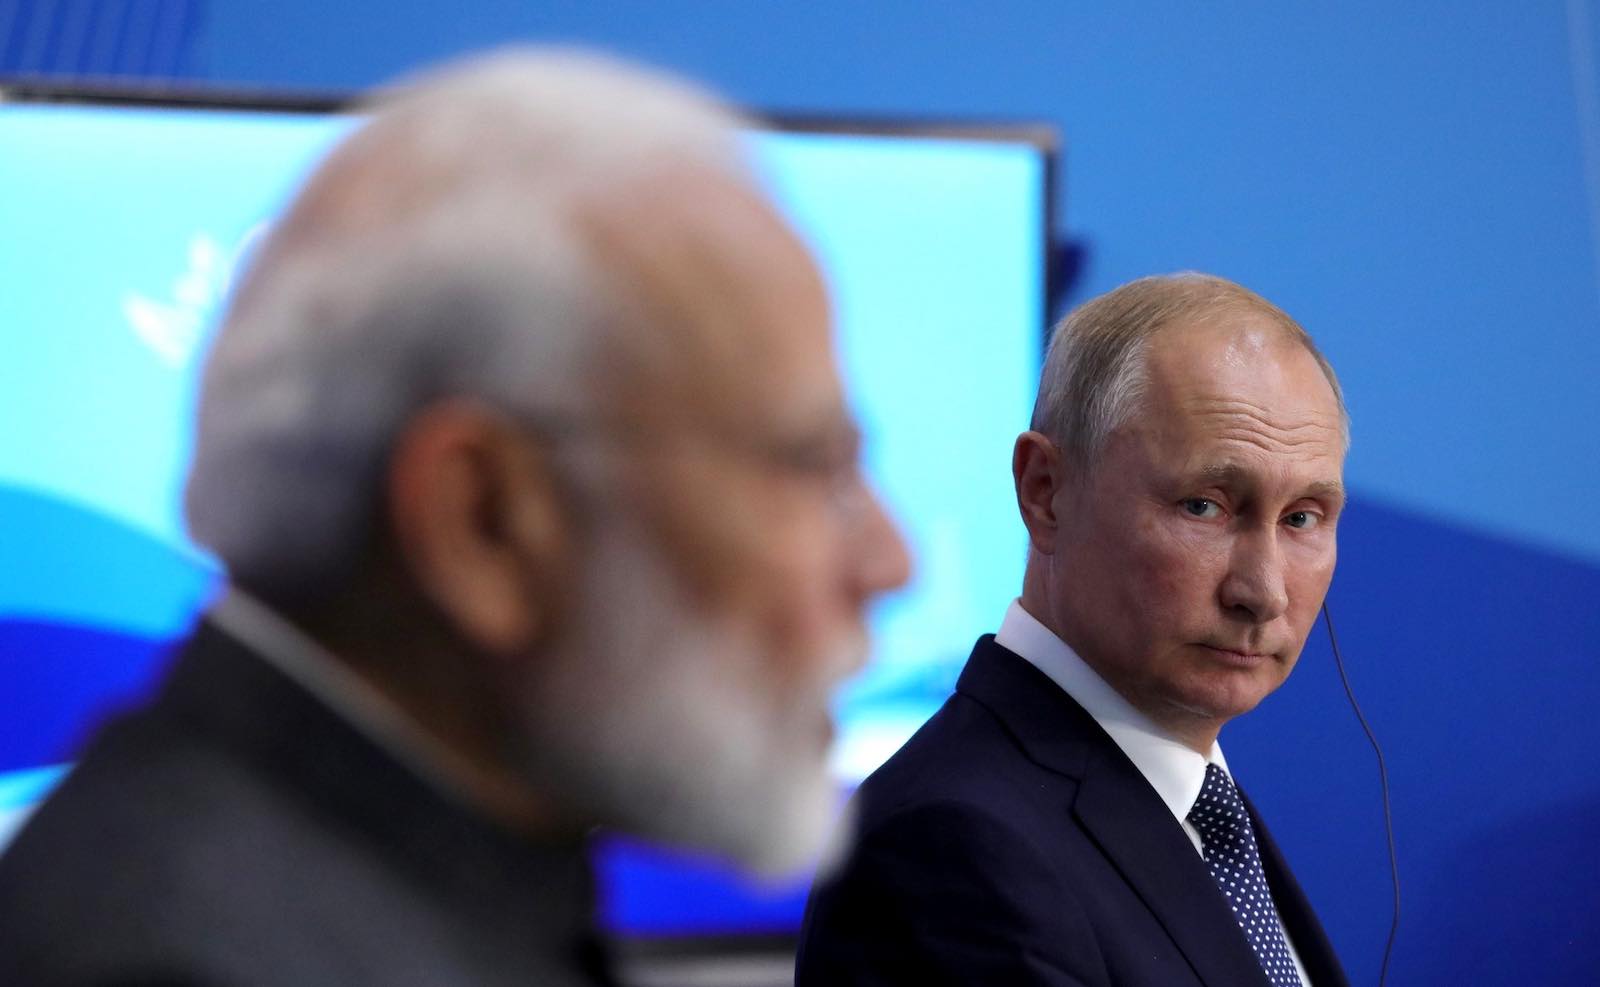 Vladimir Putin listens as Narendra Modi speaks to the media following Russian-Indian talks in 2019 (Kremlin.ru)